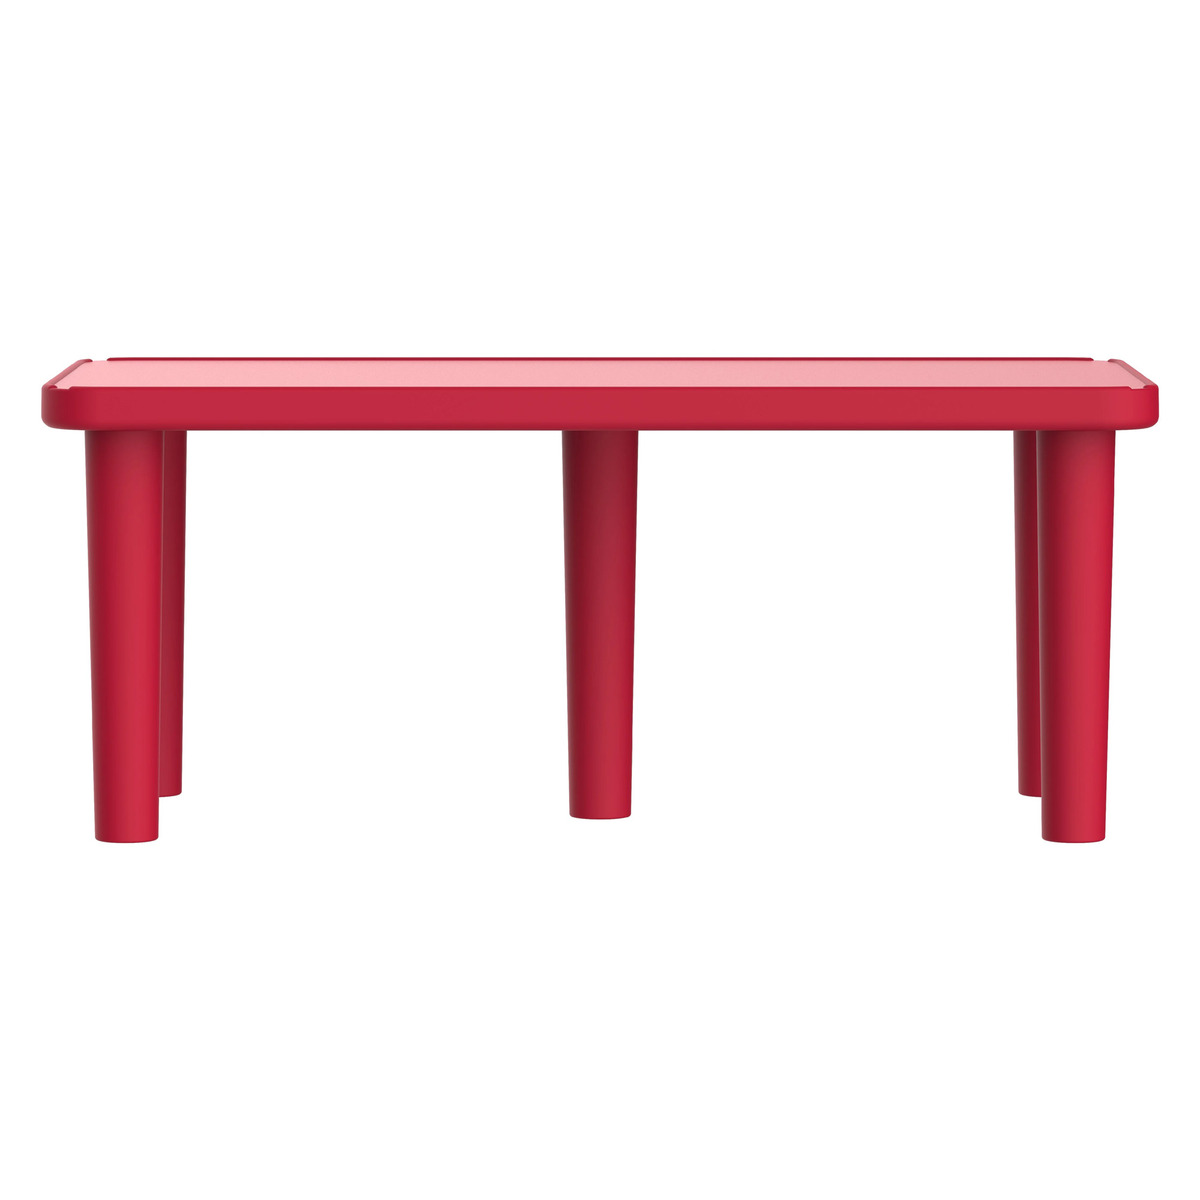 Cosmoplast Kindergarten Rectangle Table MFOBTB001 Red